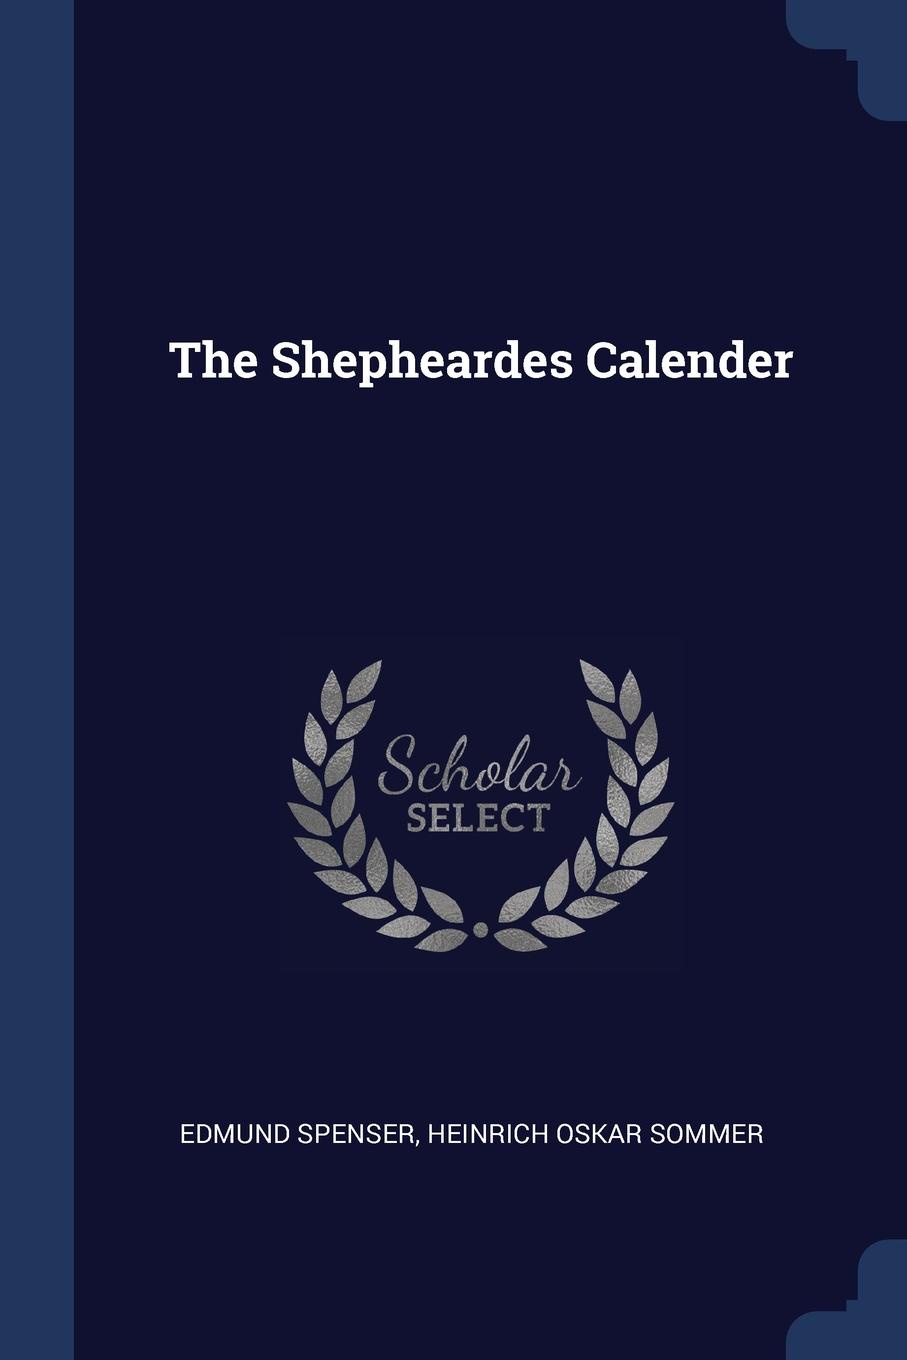 The Shepheardes Calender